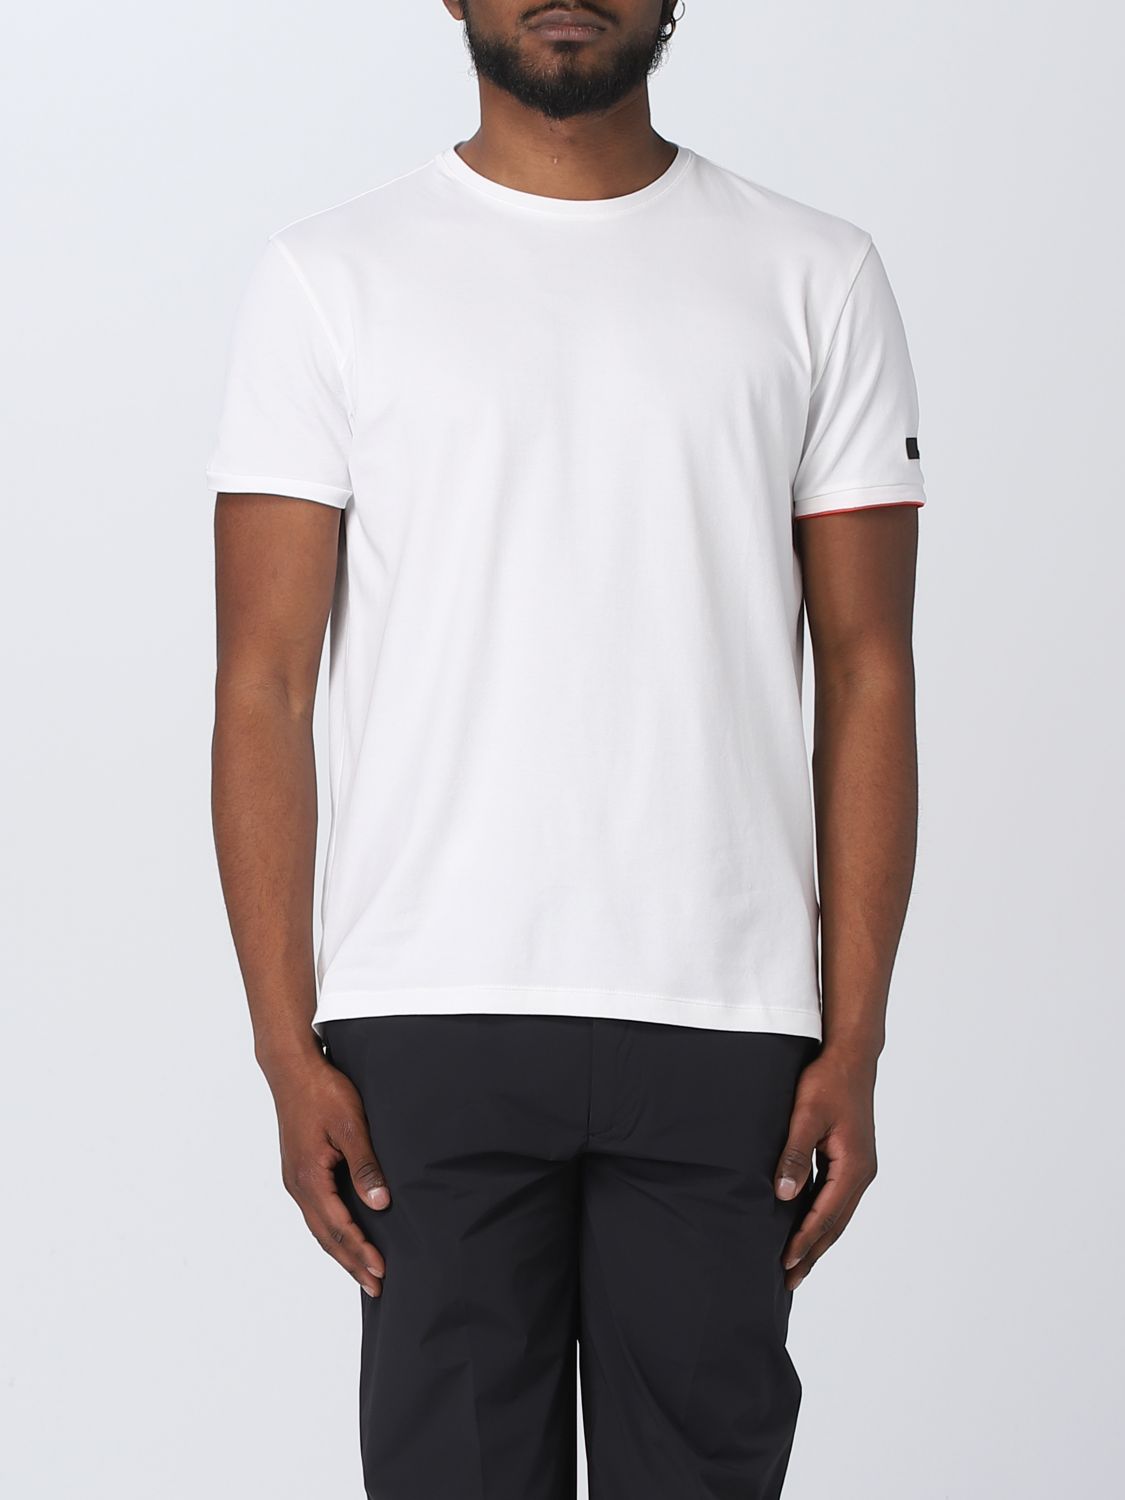 RRD: t-shirt for man - White | Rrd t-shirt 23138 online on GIGLIO.COM